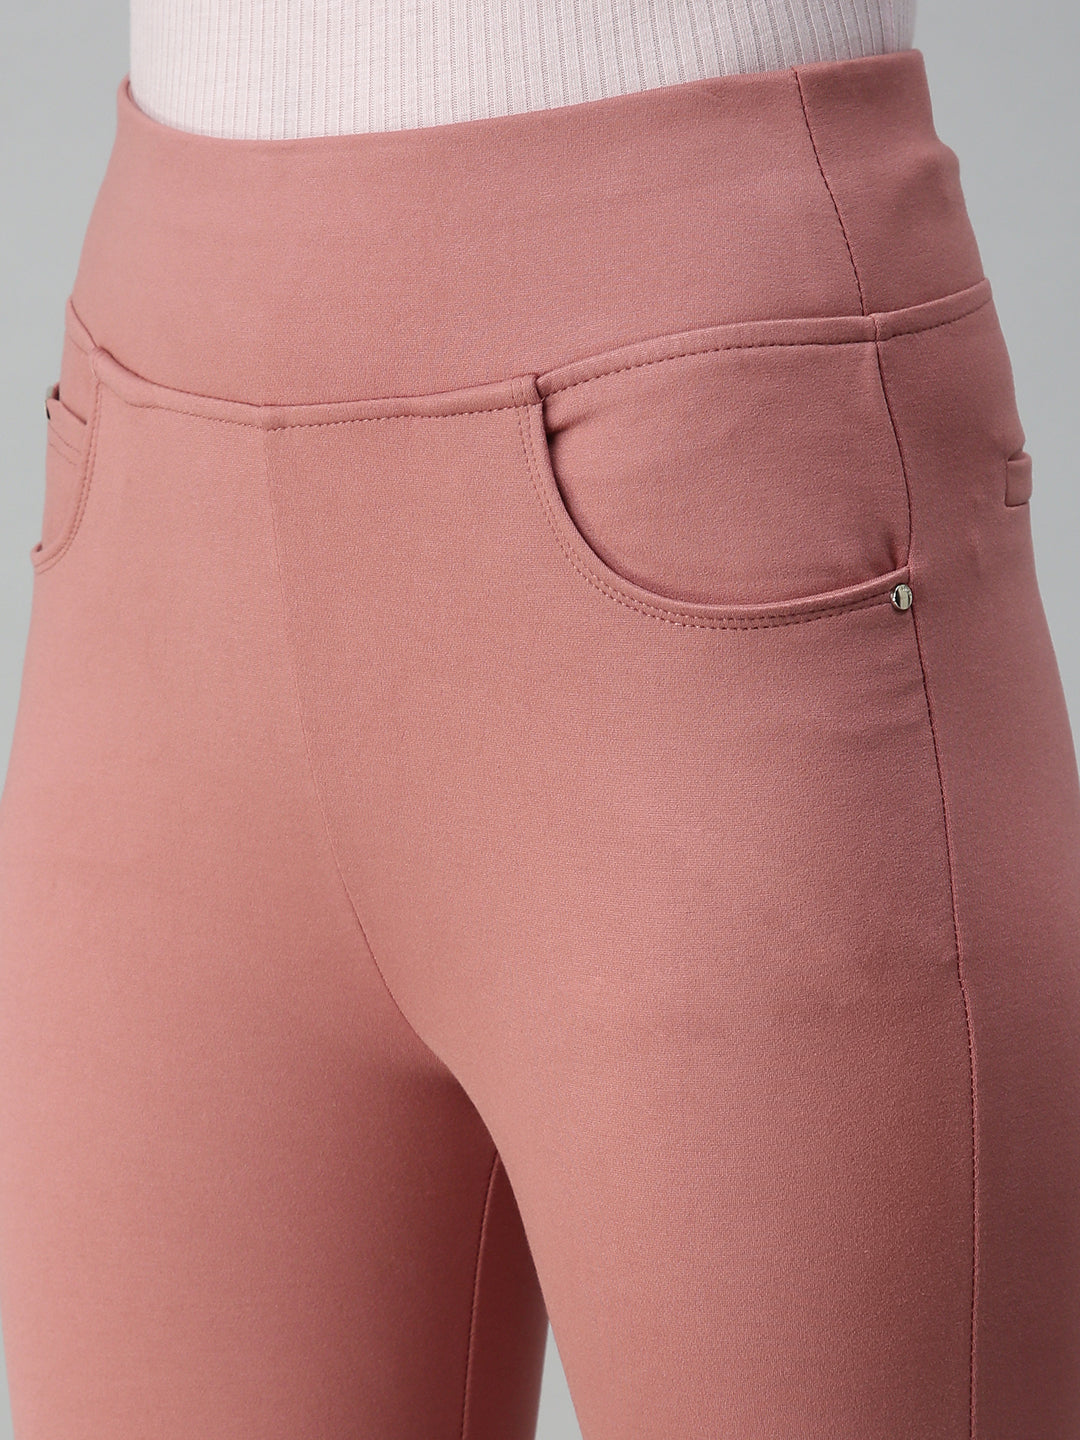 Women's Peach Solid Denim Slim Jeans